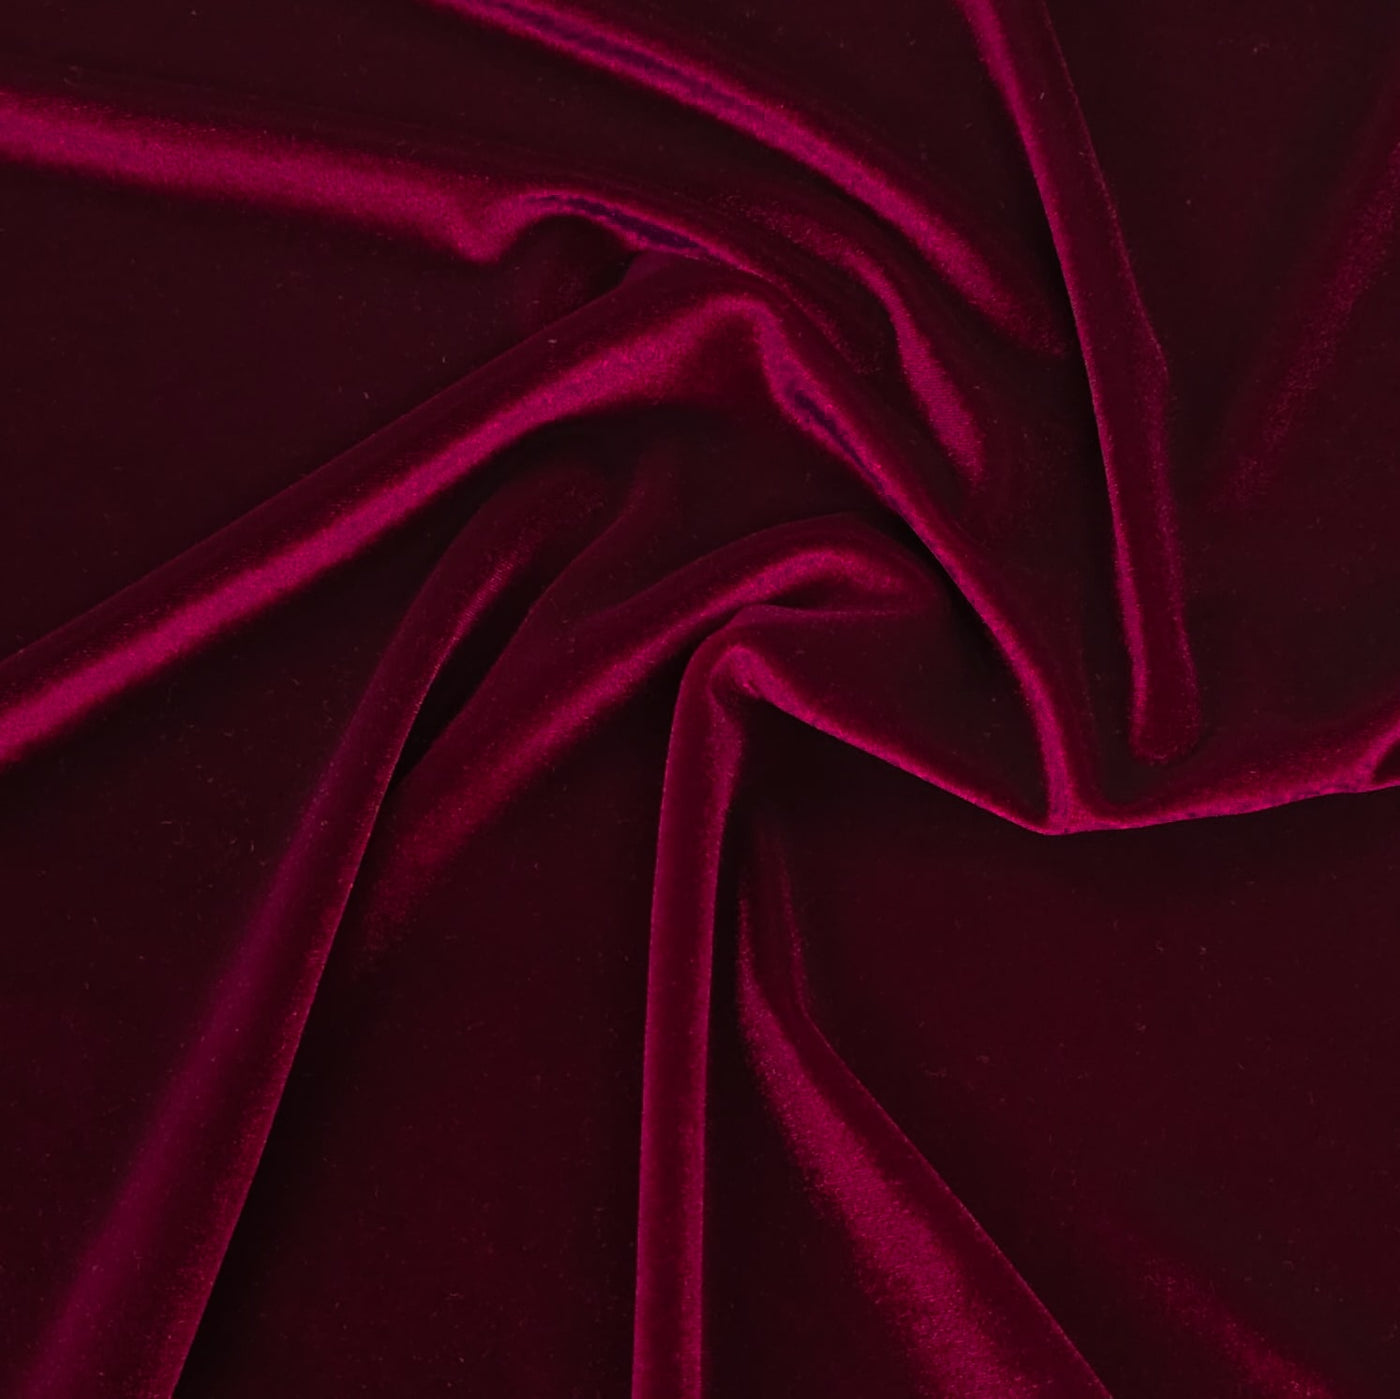 Stretch Velour Fabric | Burgundy